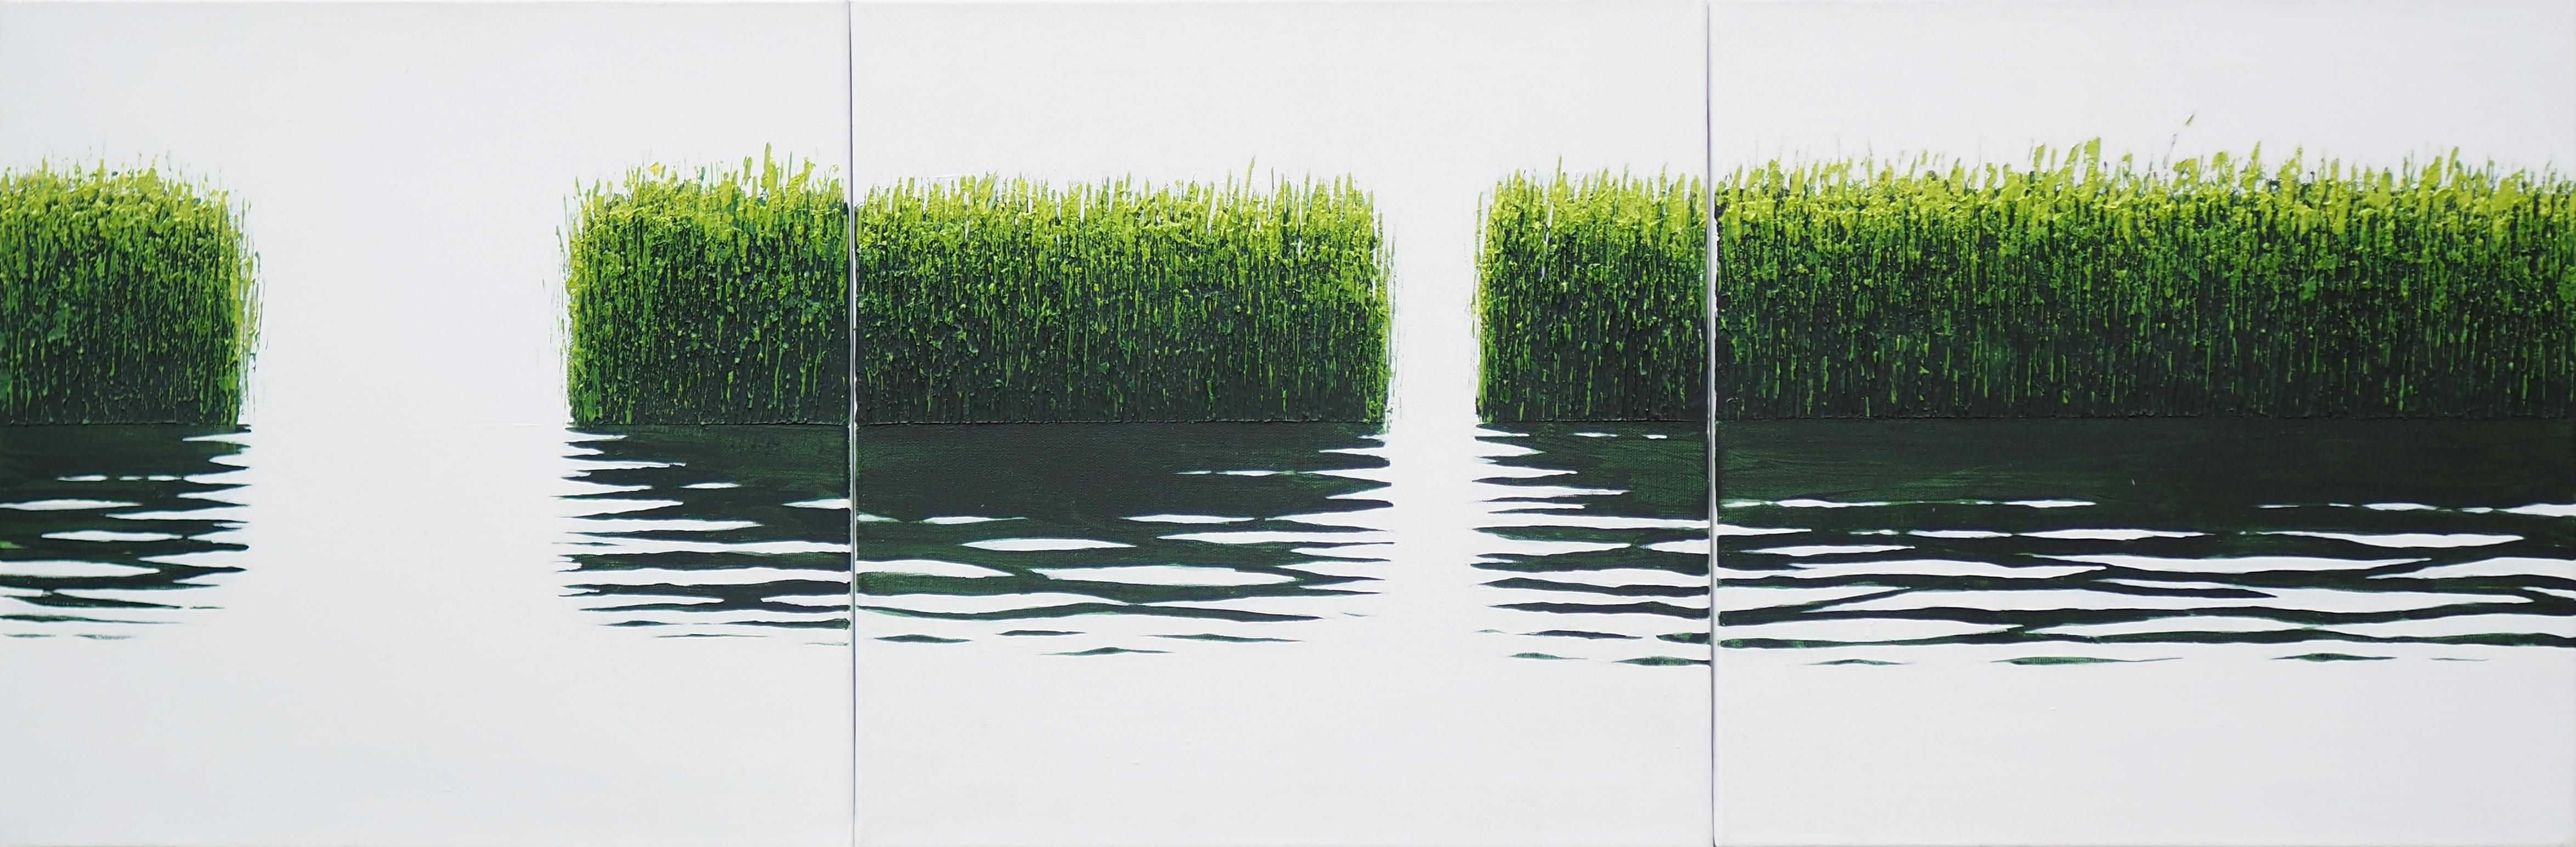 Grzegorz Wójcik Figurative Painting – GRASSES V Triptychon - Atmosphärische Landschaft, moderne Meereslandschaft, Gemälde 